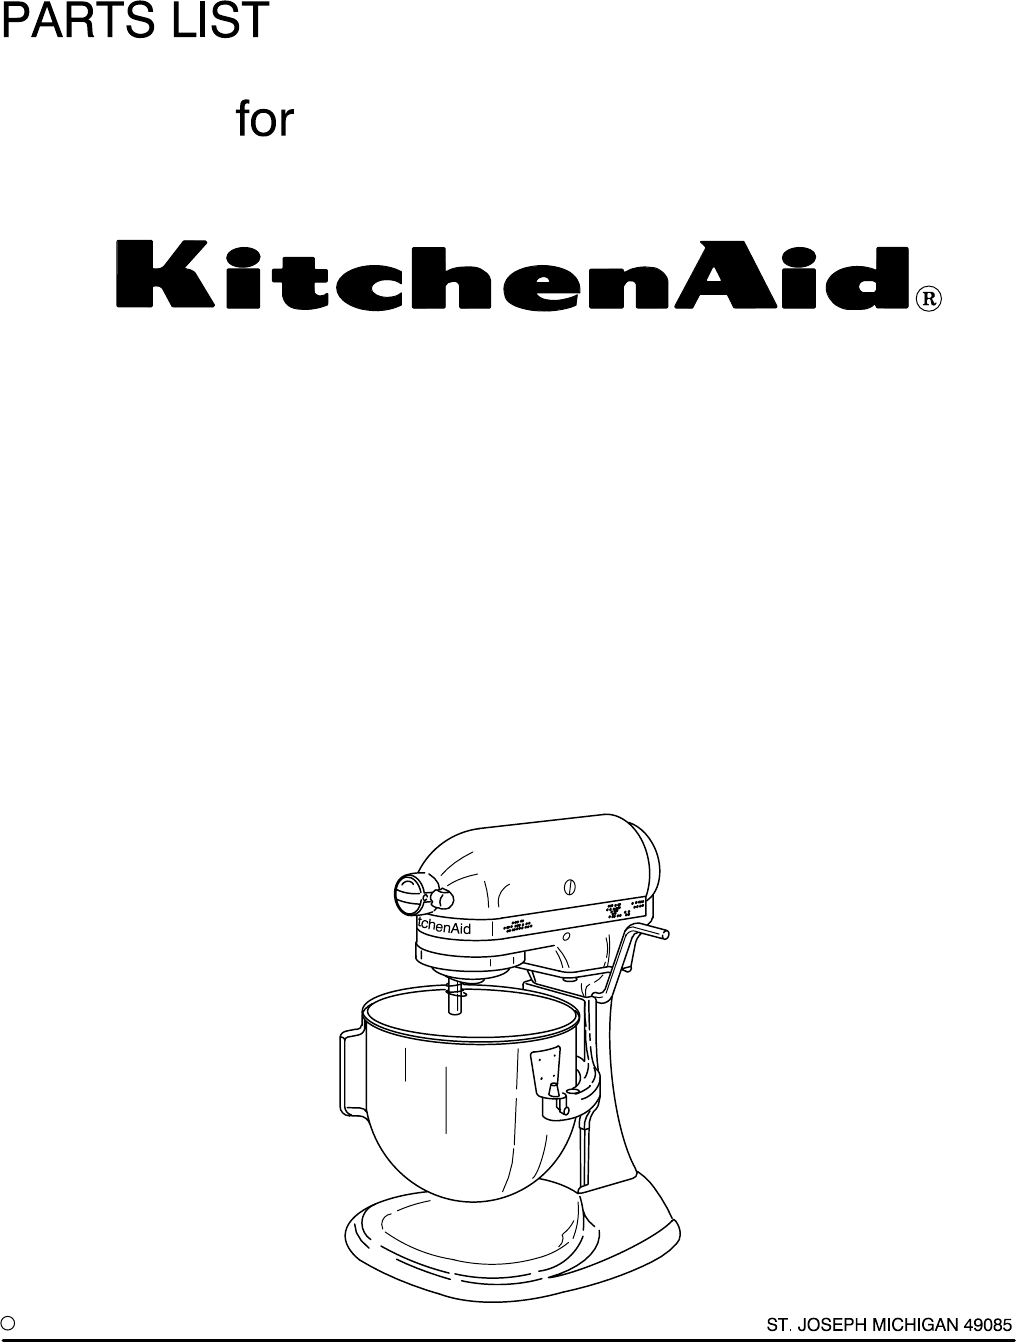 Kitchenaid Kitchen Aid Mixer Kp50p